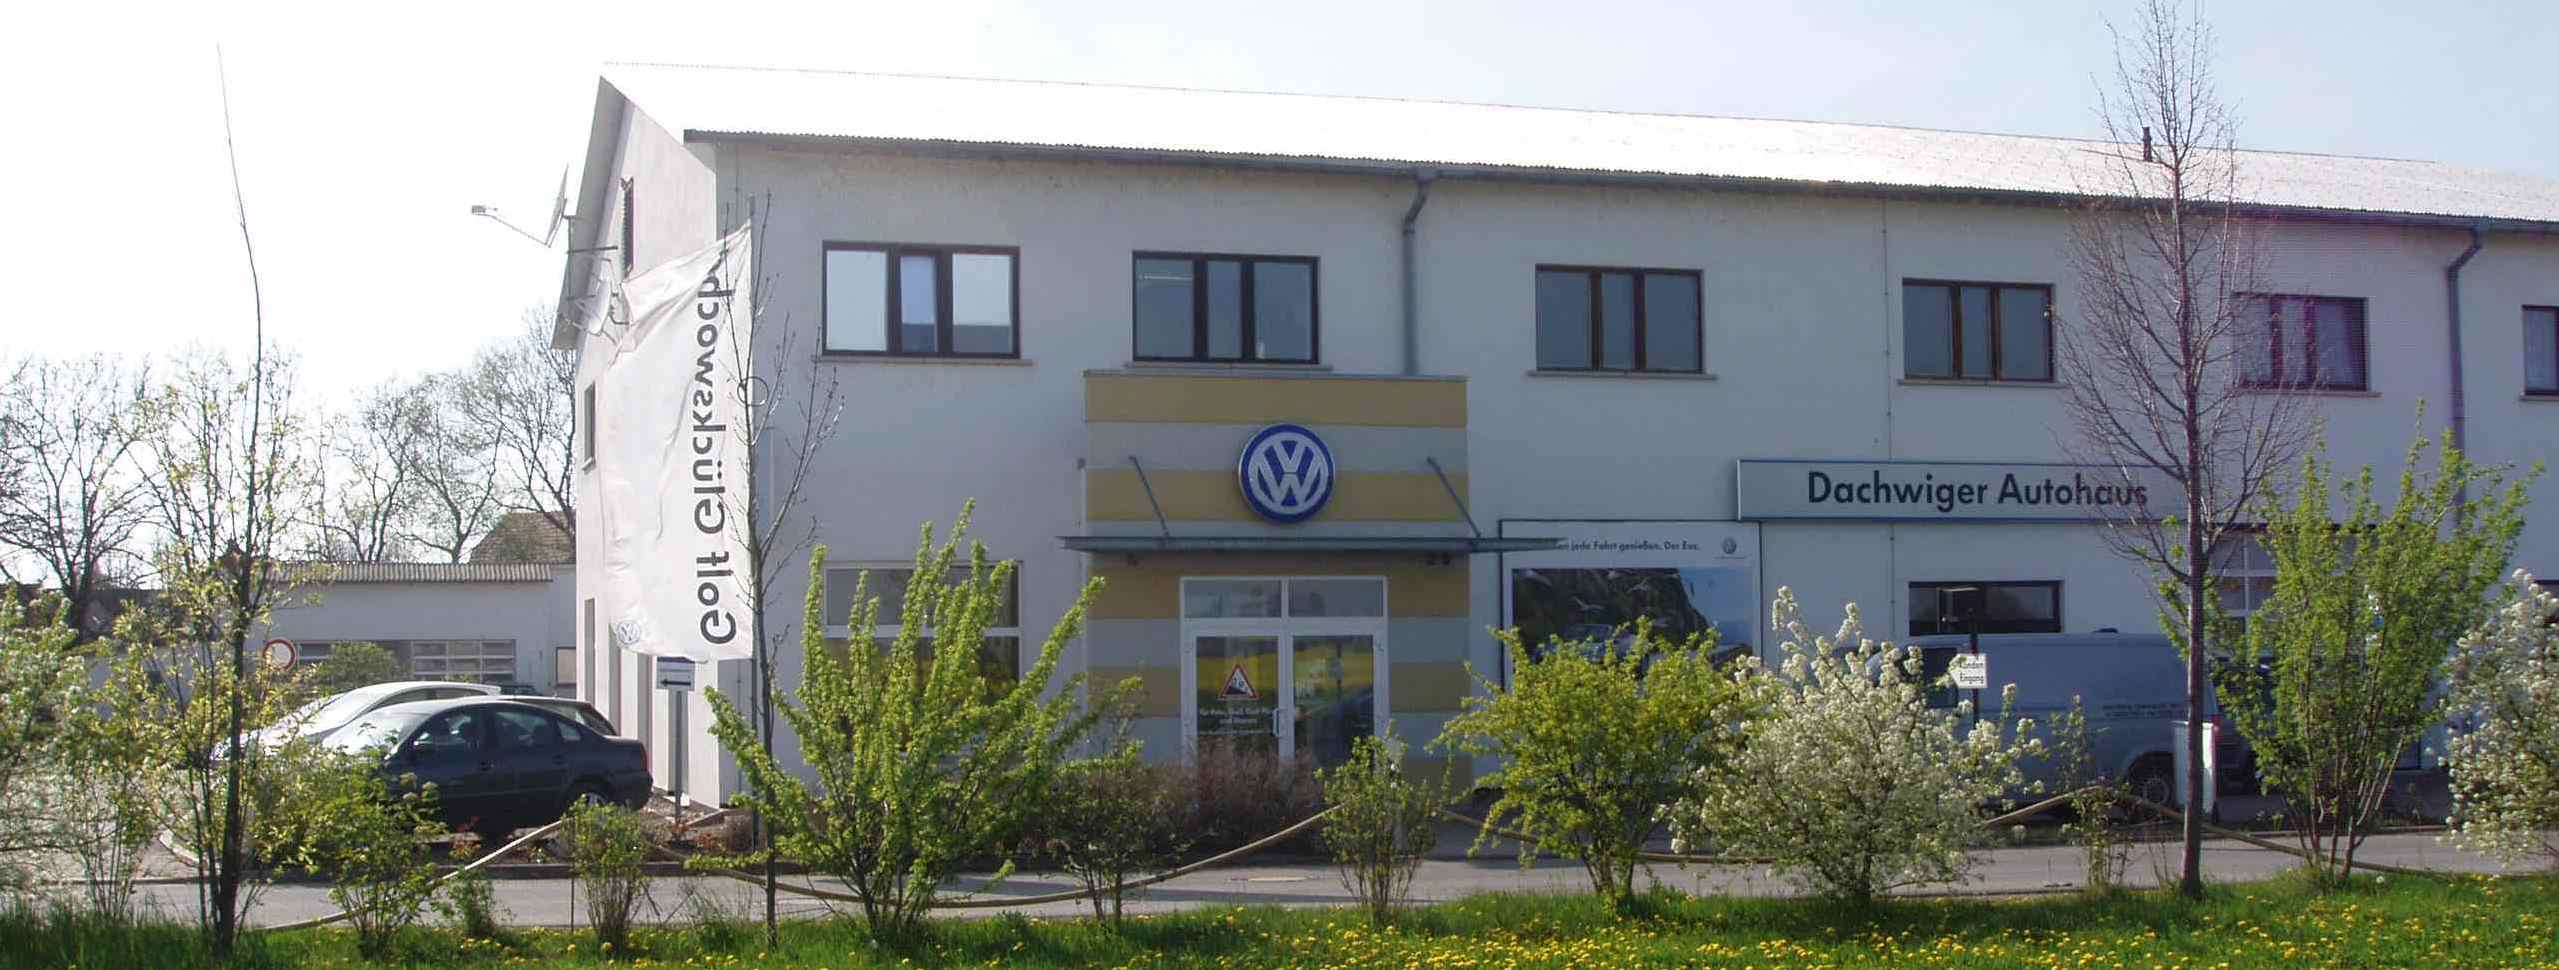 Dachwiger Autohaus